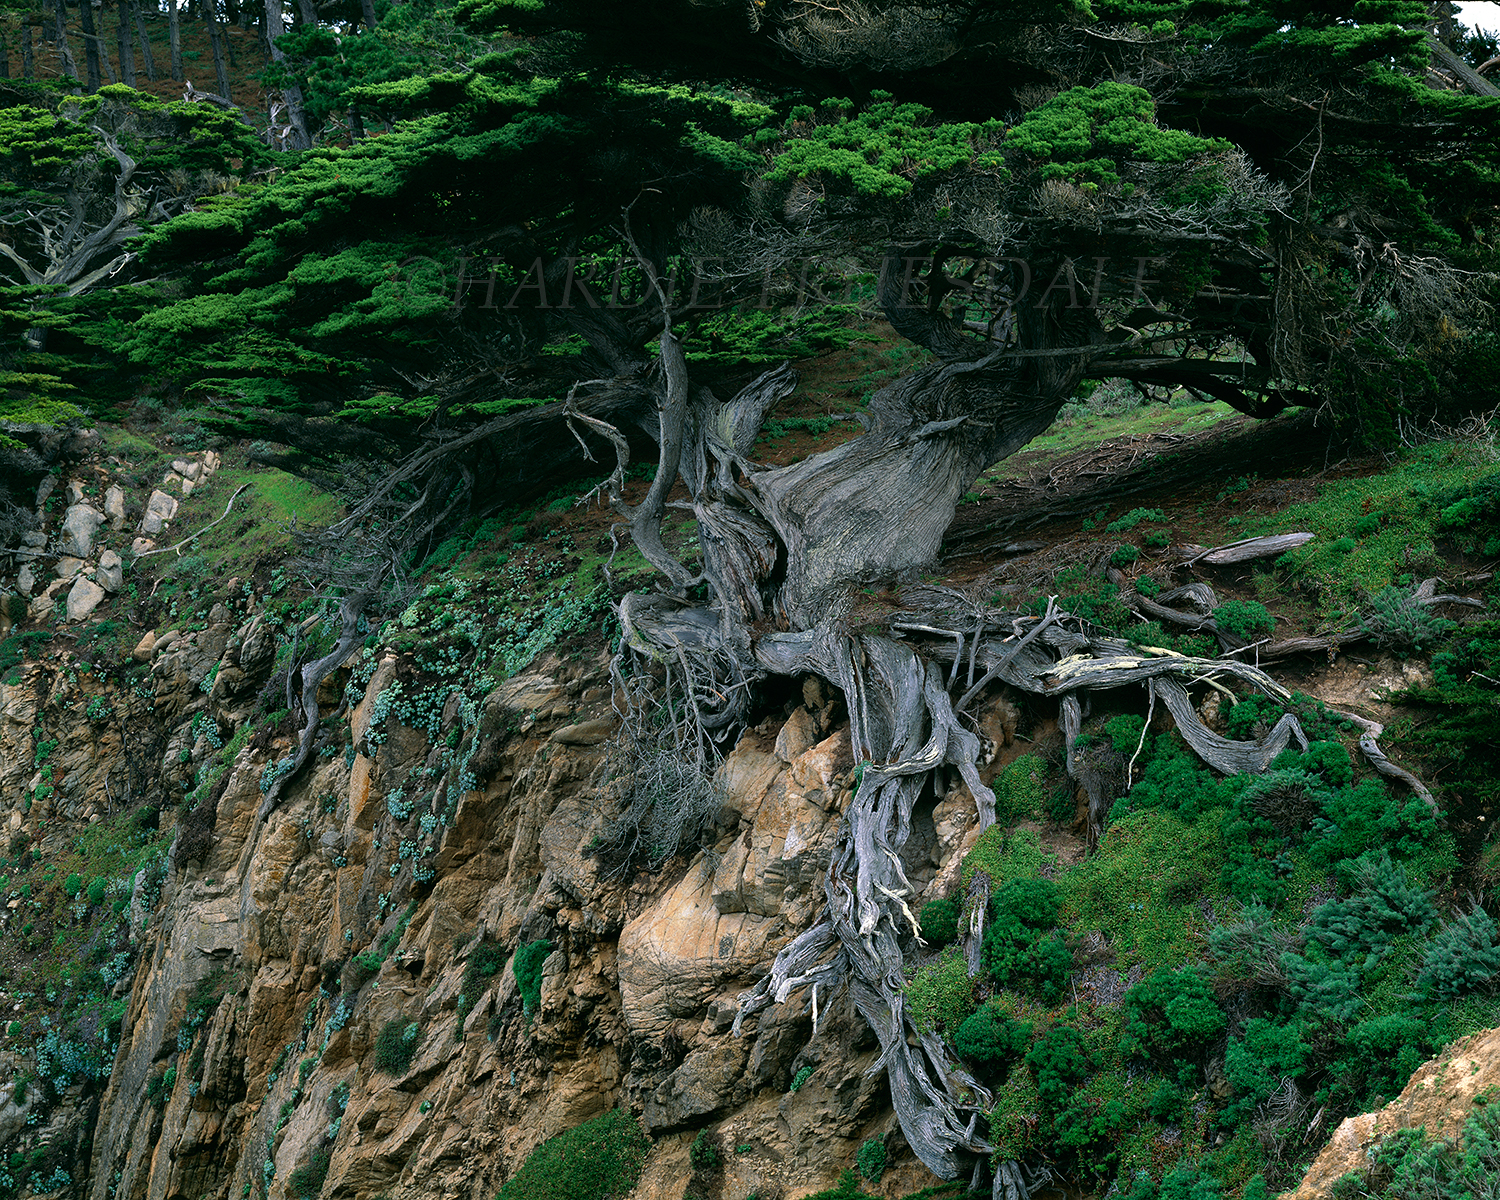  CA#012 "Old Veteran Cypress, Point Lobos State Reserve, CA" 